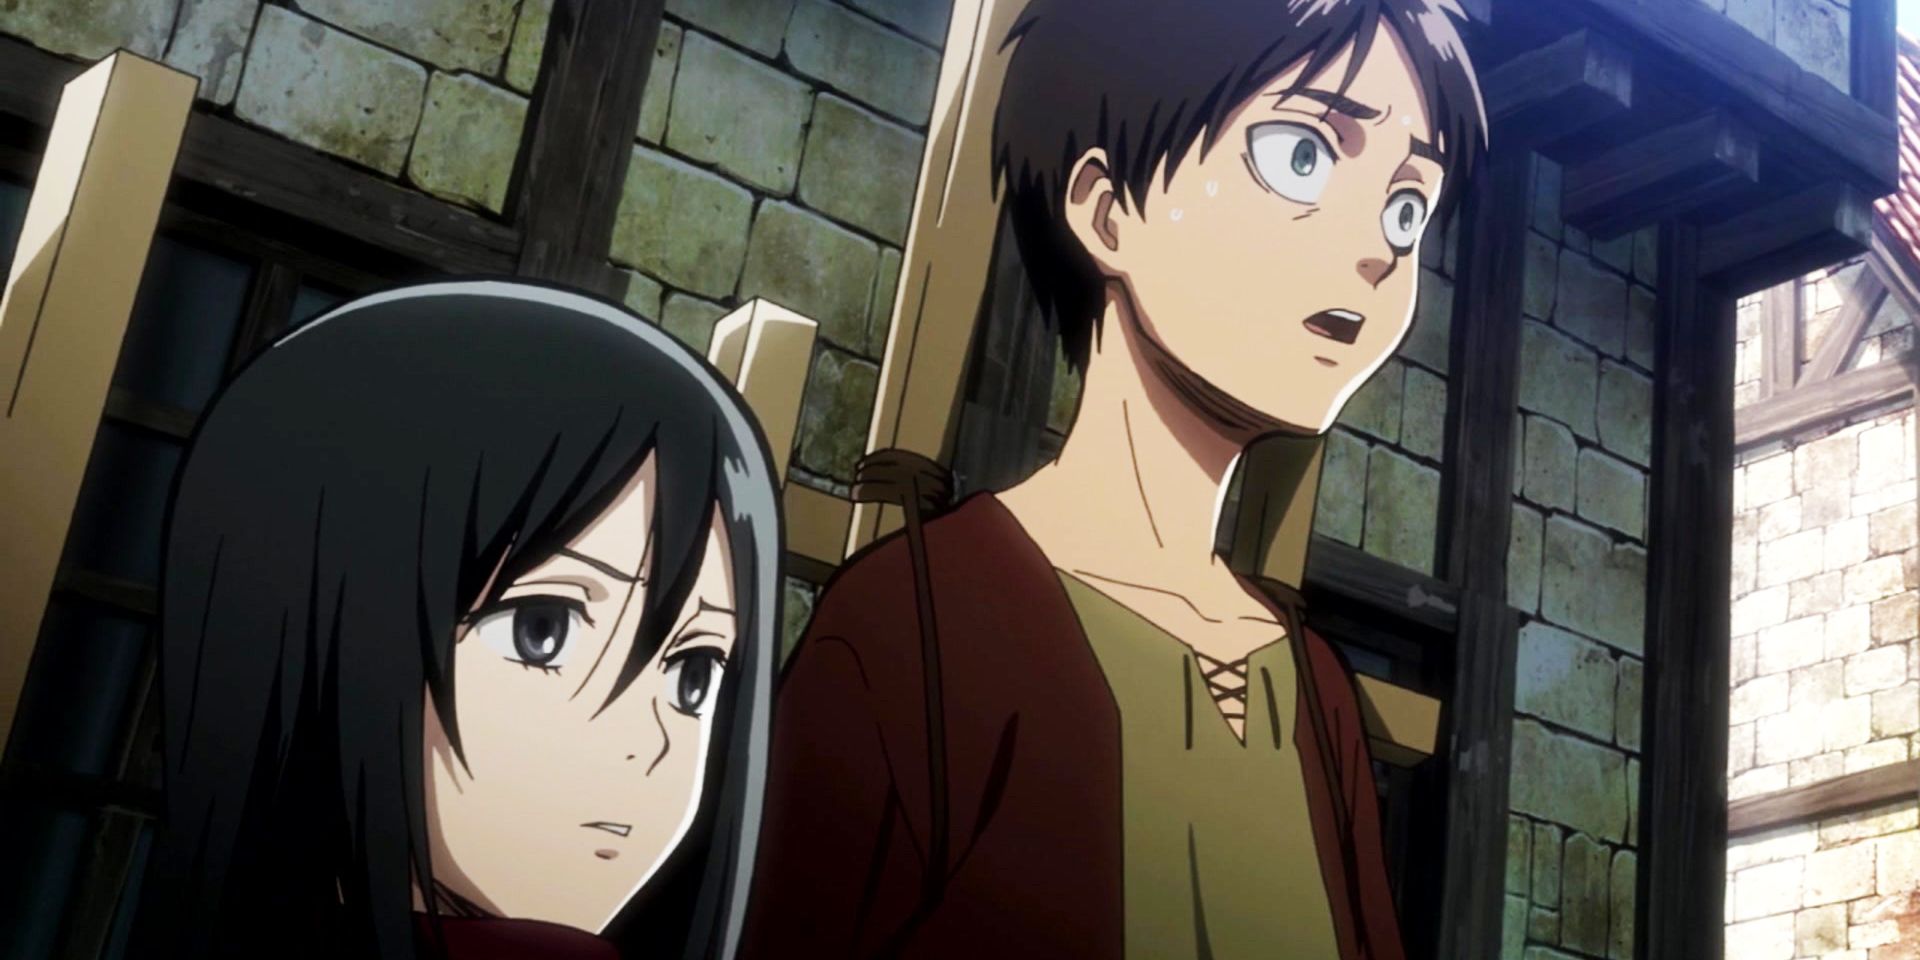 Mikasa and Eren as kids